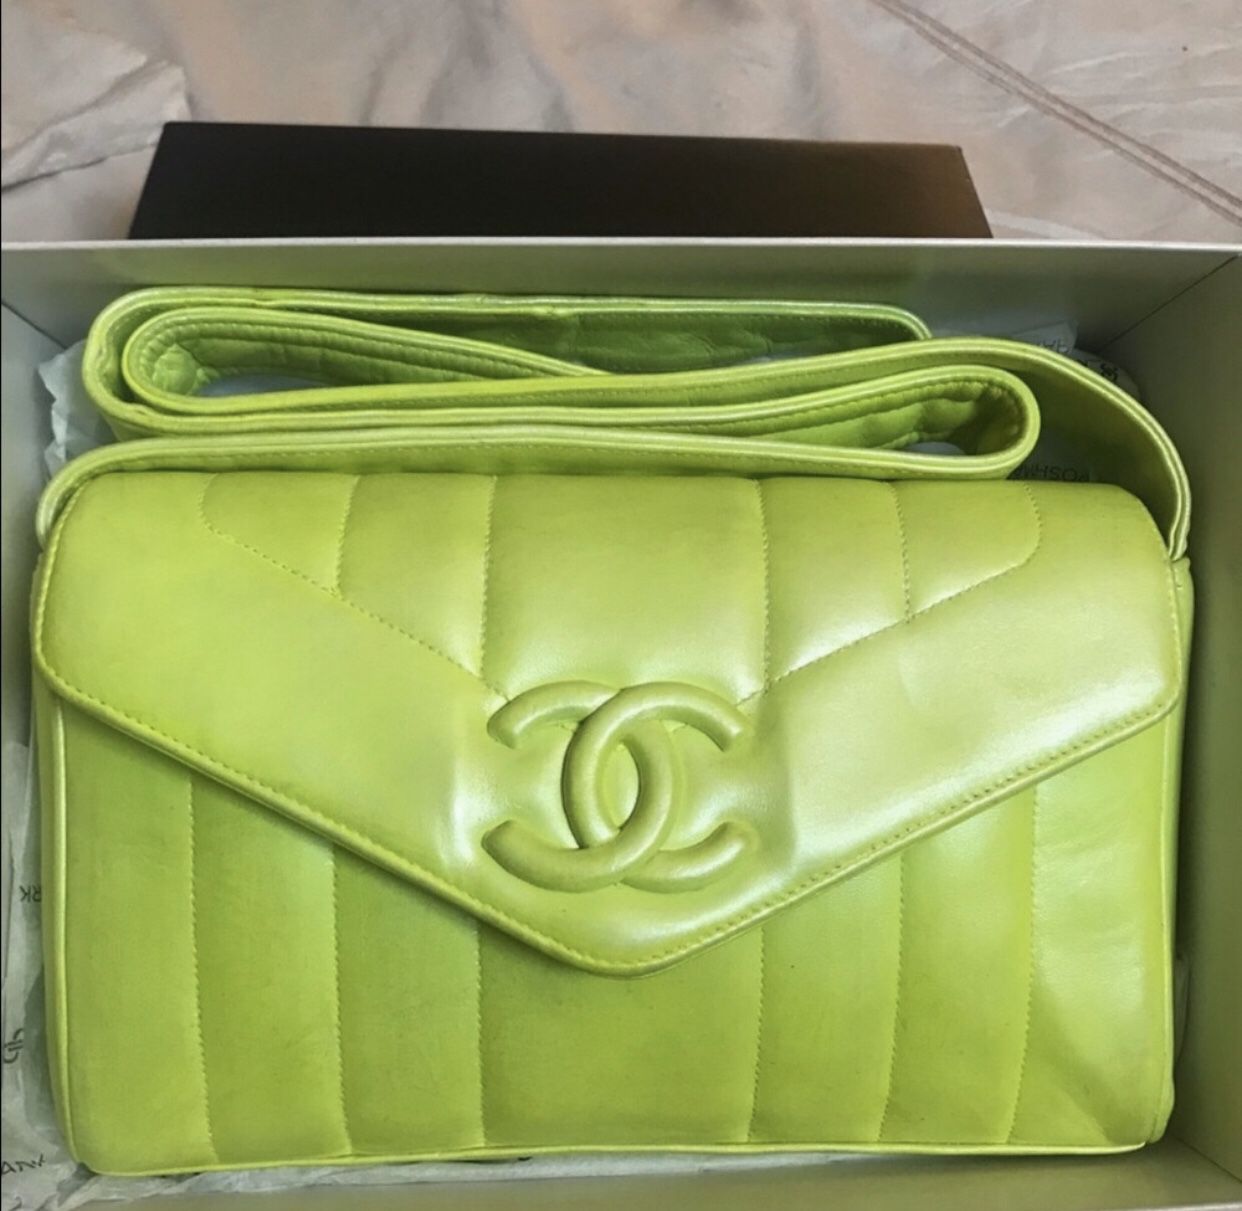 Authentic Chanel Bag